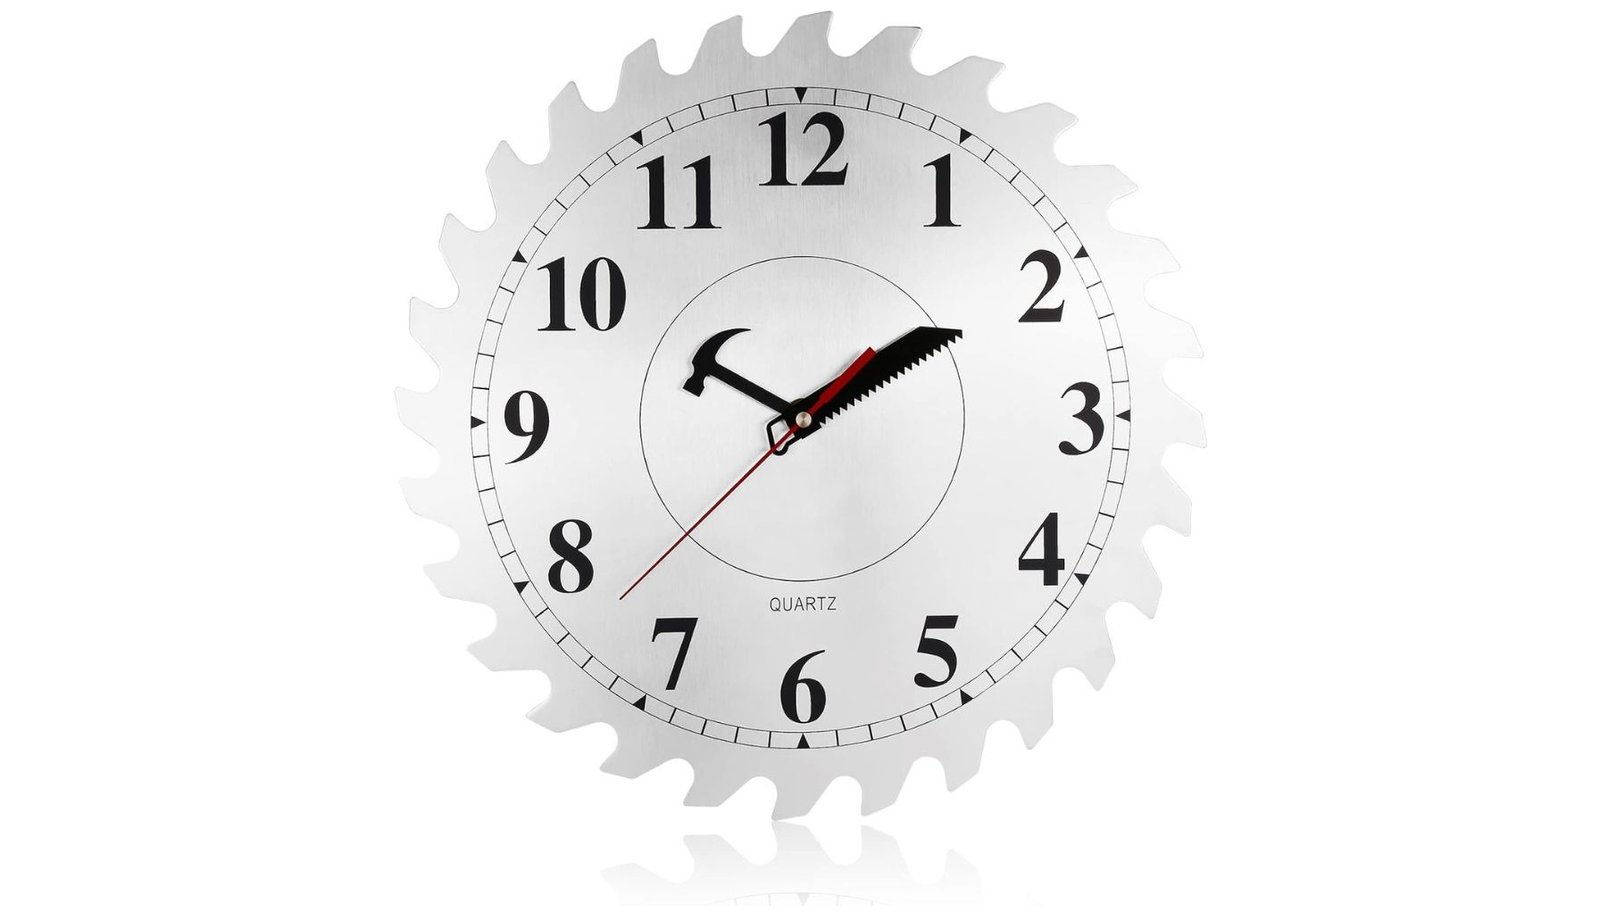 CIGERA 12 Inch Metal Circular Garage Wall Clock Review